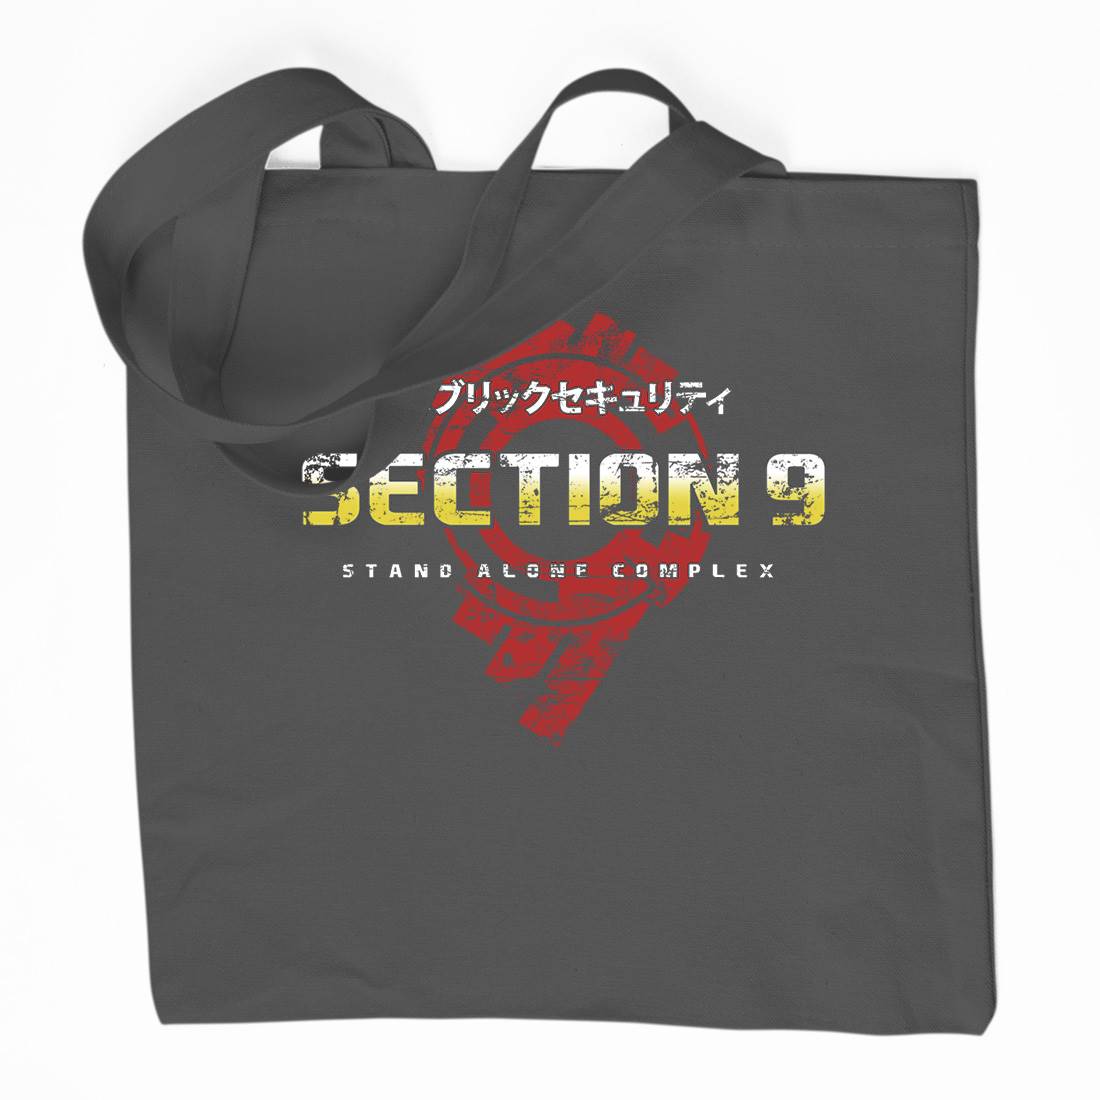 Section 9 Organic Premium Cotton Tote Bag Space D193